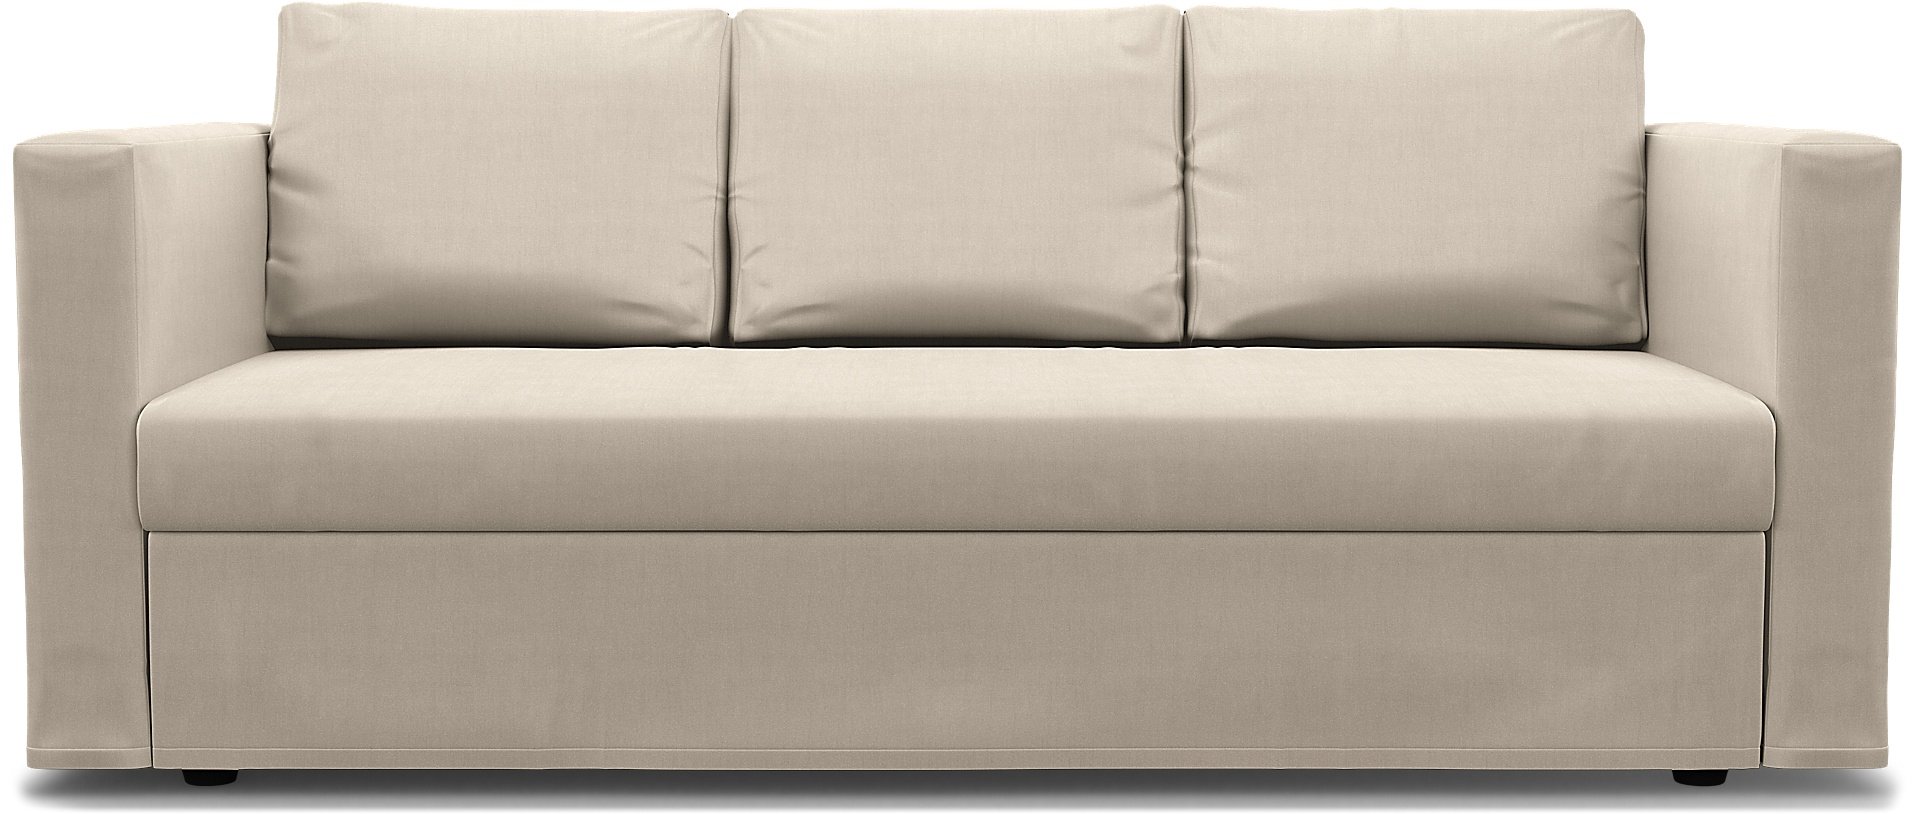 IKEA - Friheten 3 Seater Sofa Bed Cover, Parchment, Linen - Bemz